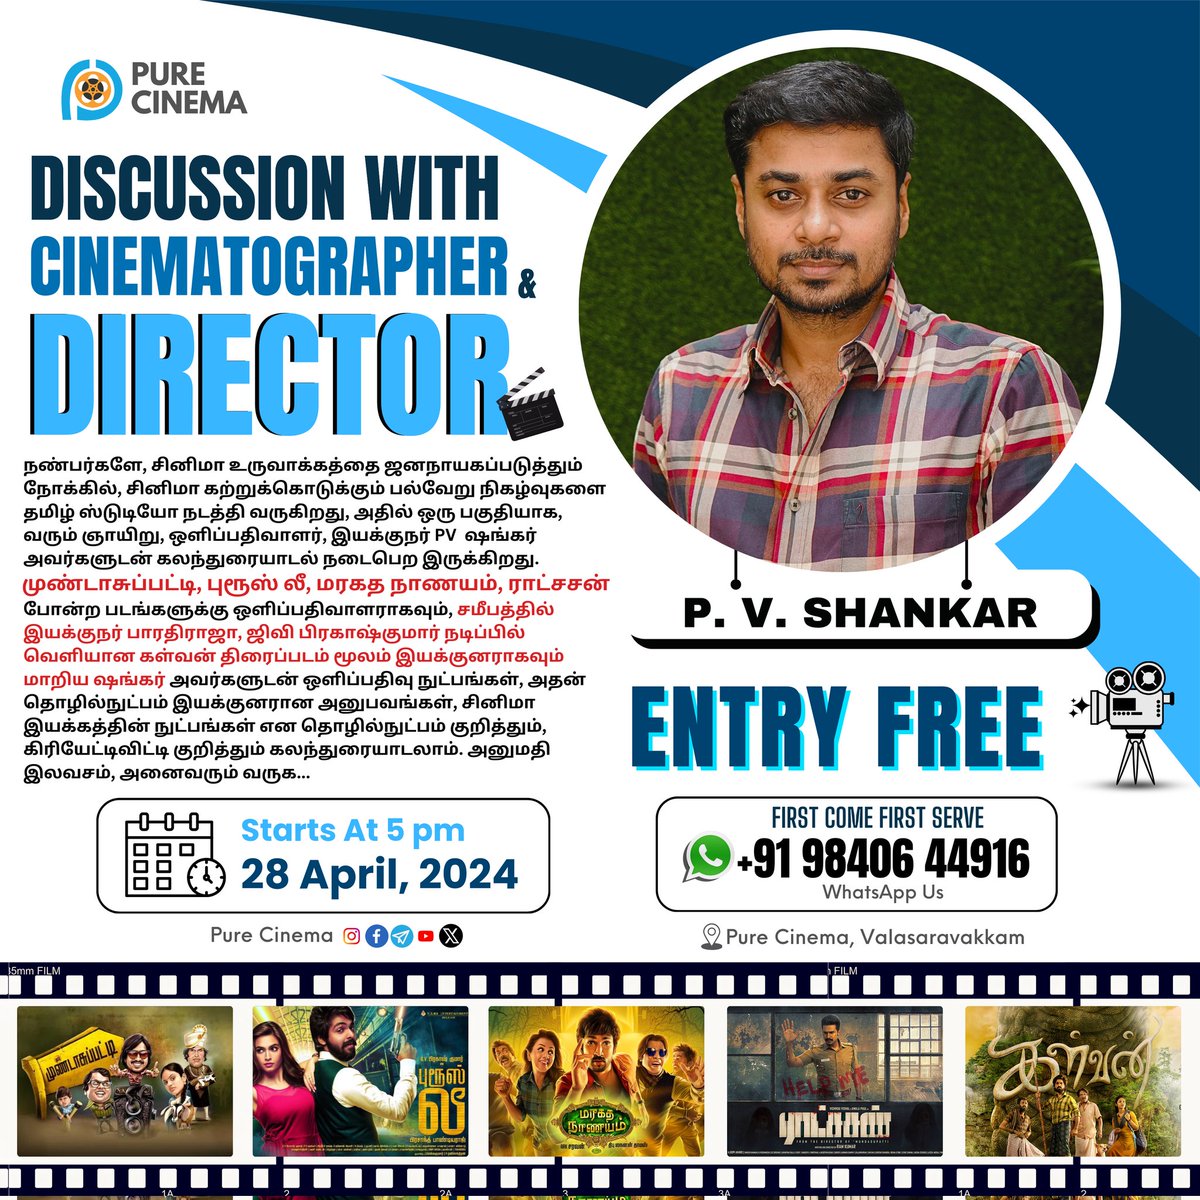 Discussion with Cinematographer & Director P.V. Shankar
Entry is free, all are welcome… 
(First Come First Serve) 
 
#Mundasupatti #Ratsasan #MaragadhaNaanayam #BruceLee #Bharathiraja  #Kalvan #Chennai #Kalvan #KalvanMovie #Bharathiraja #purecinema